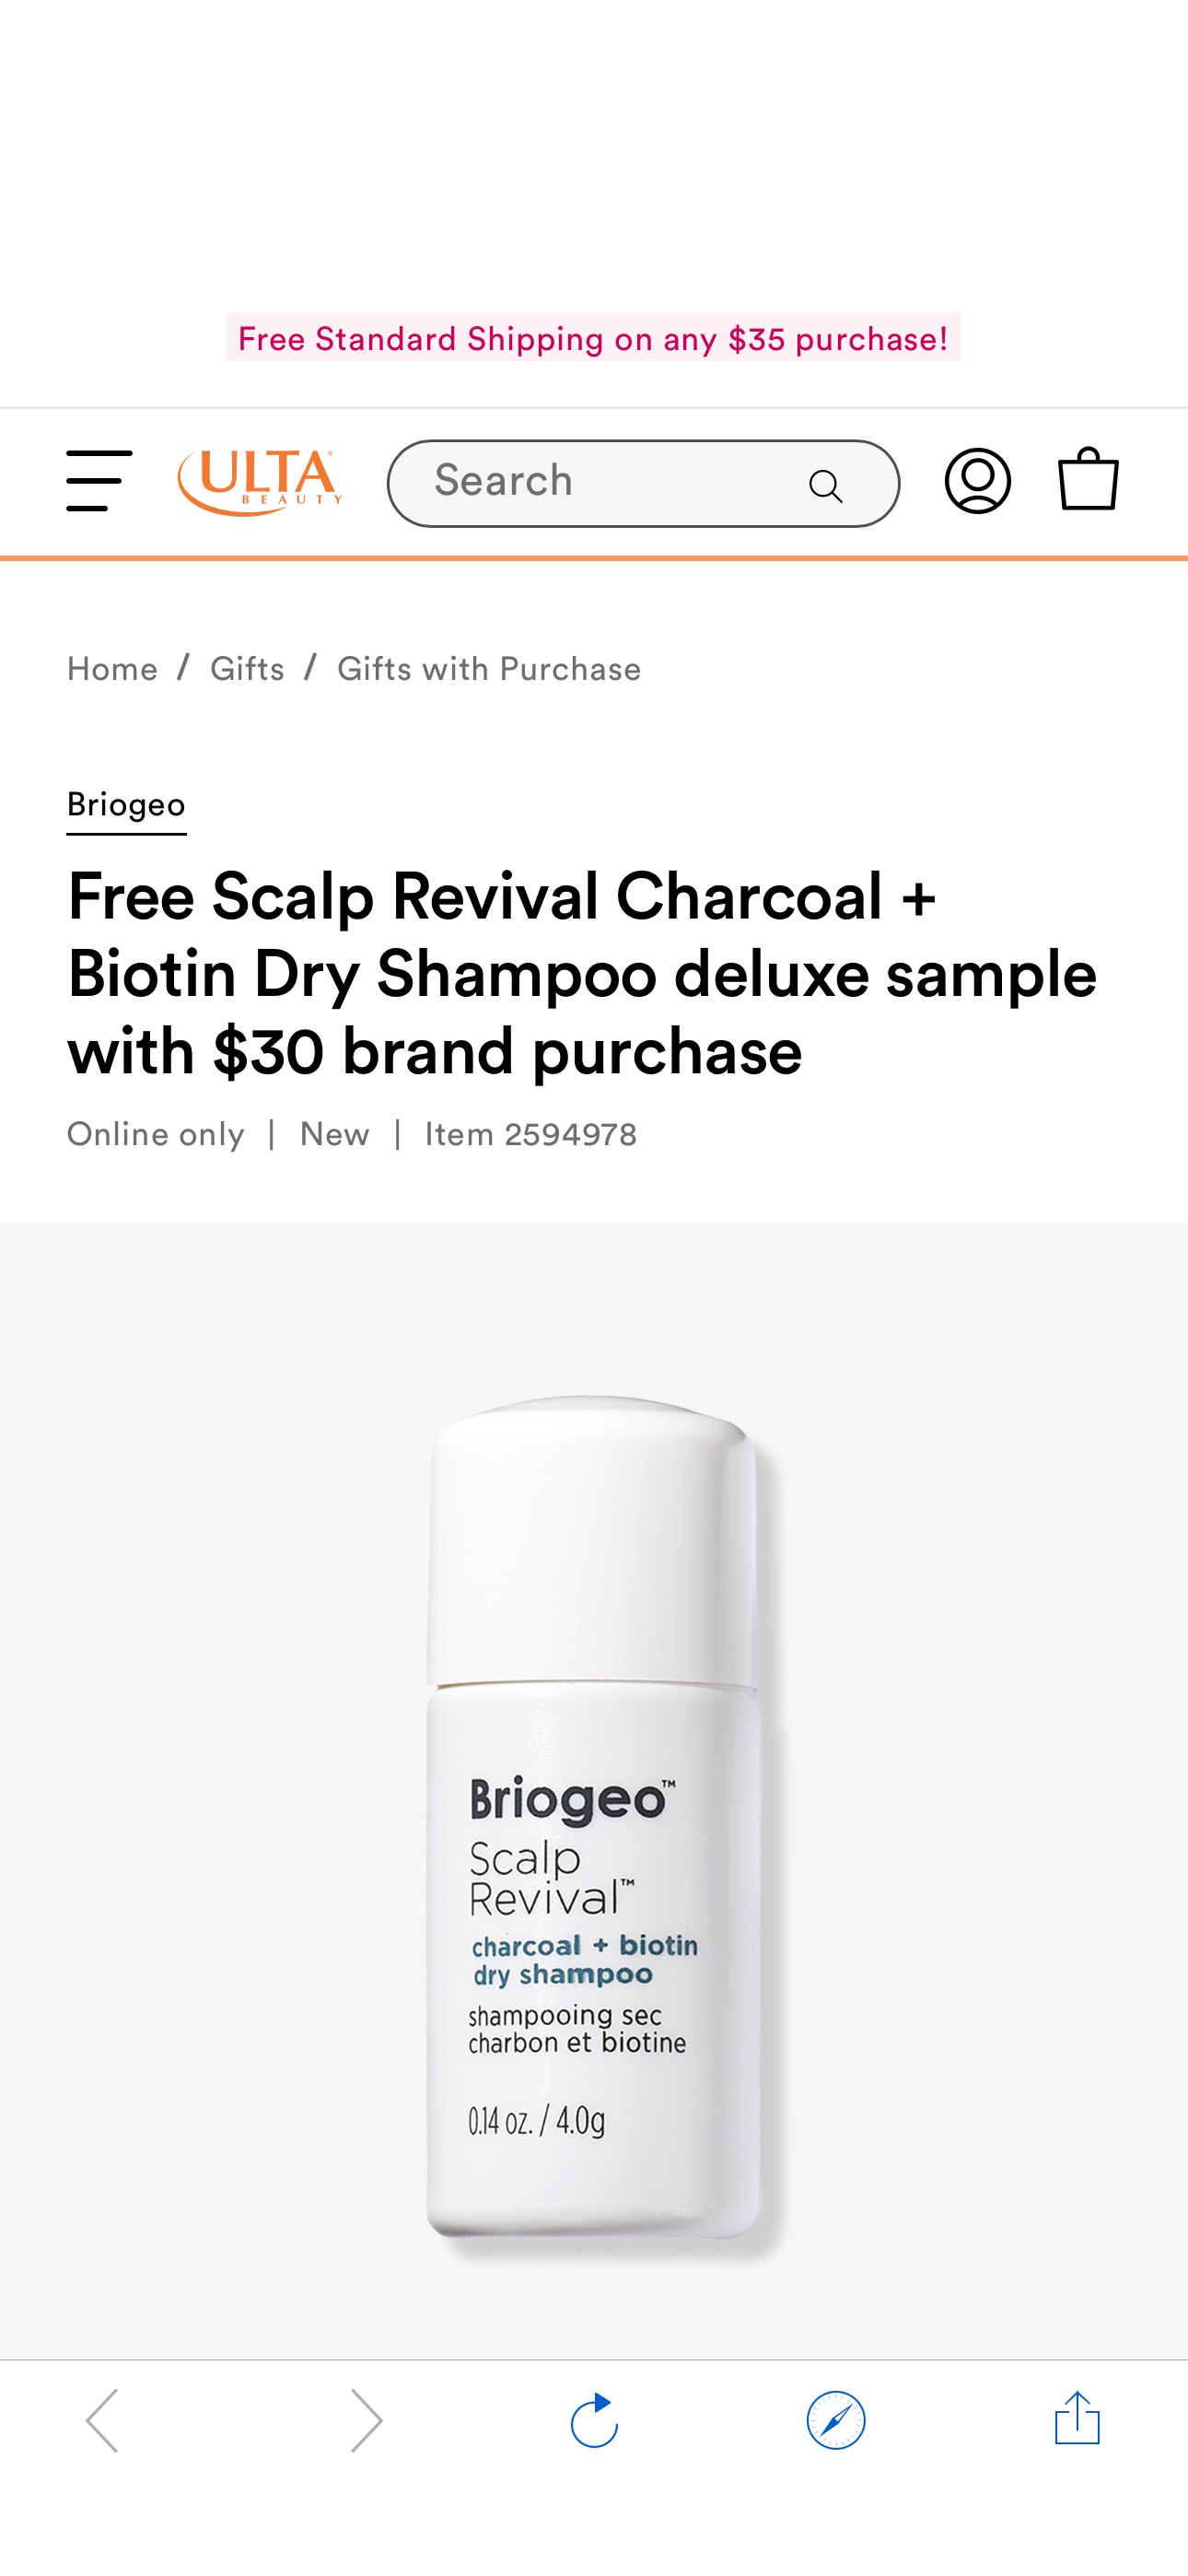 Free Scalp Revival Charcoal + Biotin Dry Shampoo deluxe sample with $30 brand purchase - Briogeo | Ulta Beauty